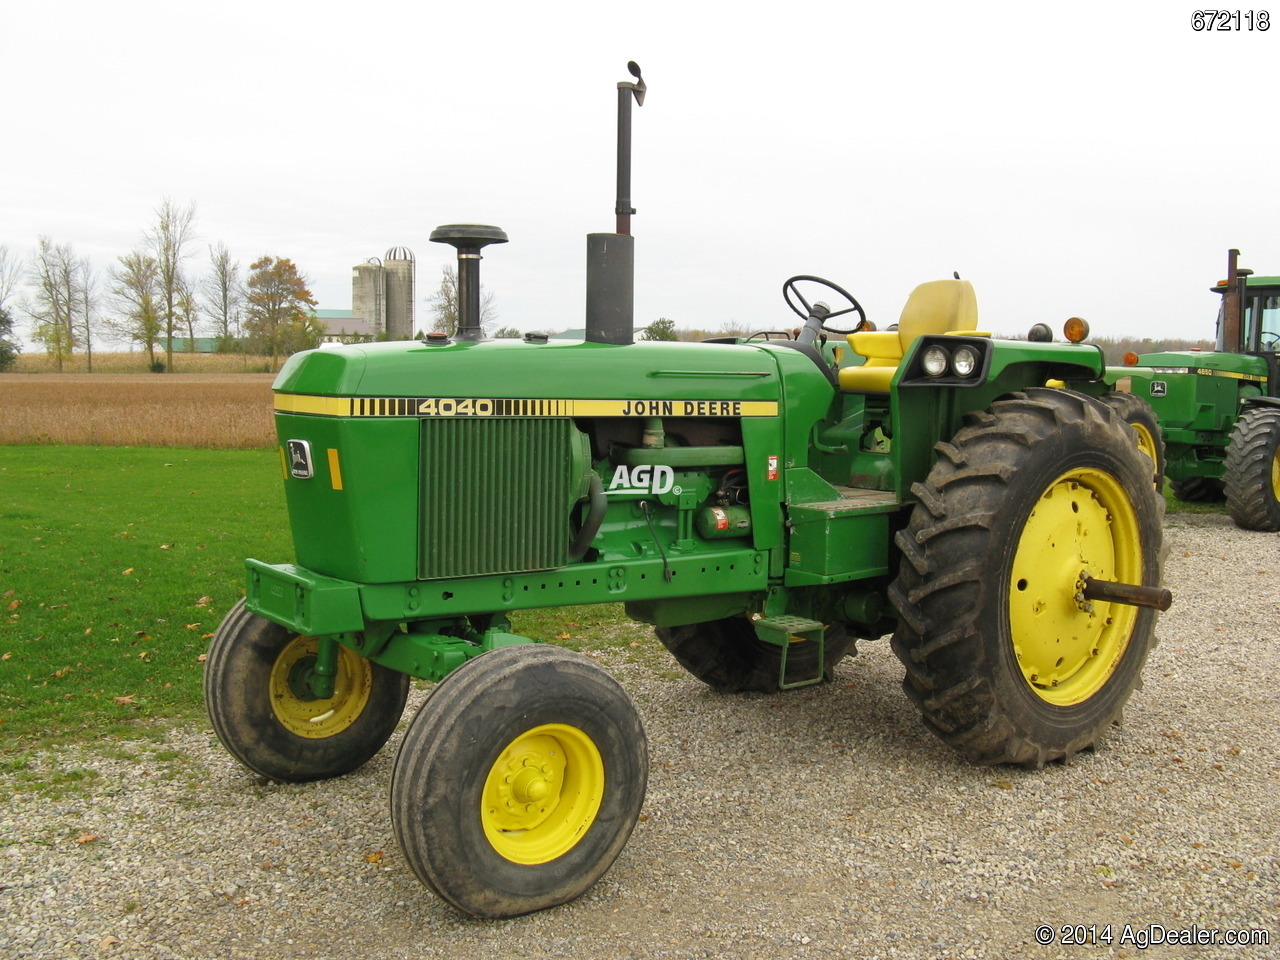 1280 x 960 jpeg 391kB, 1979 John Deere 4040 Tractor For Sale ...